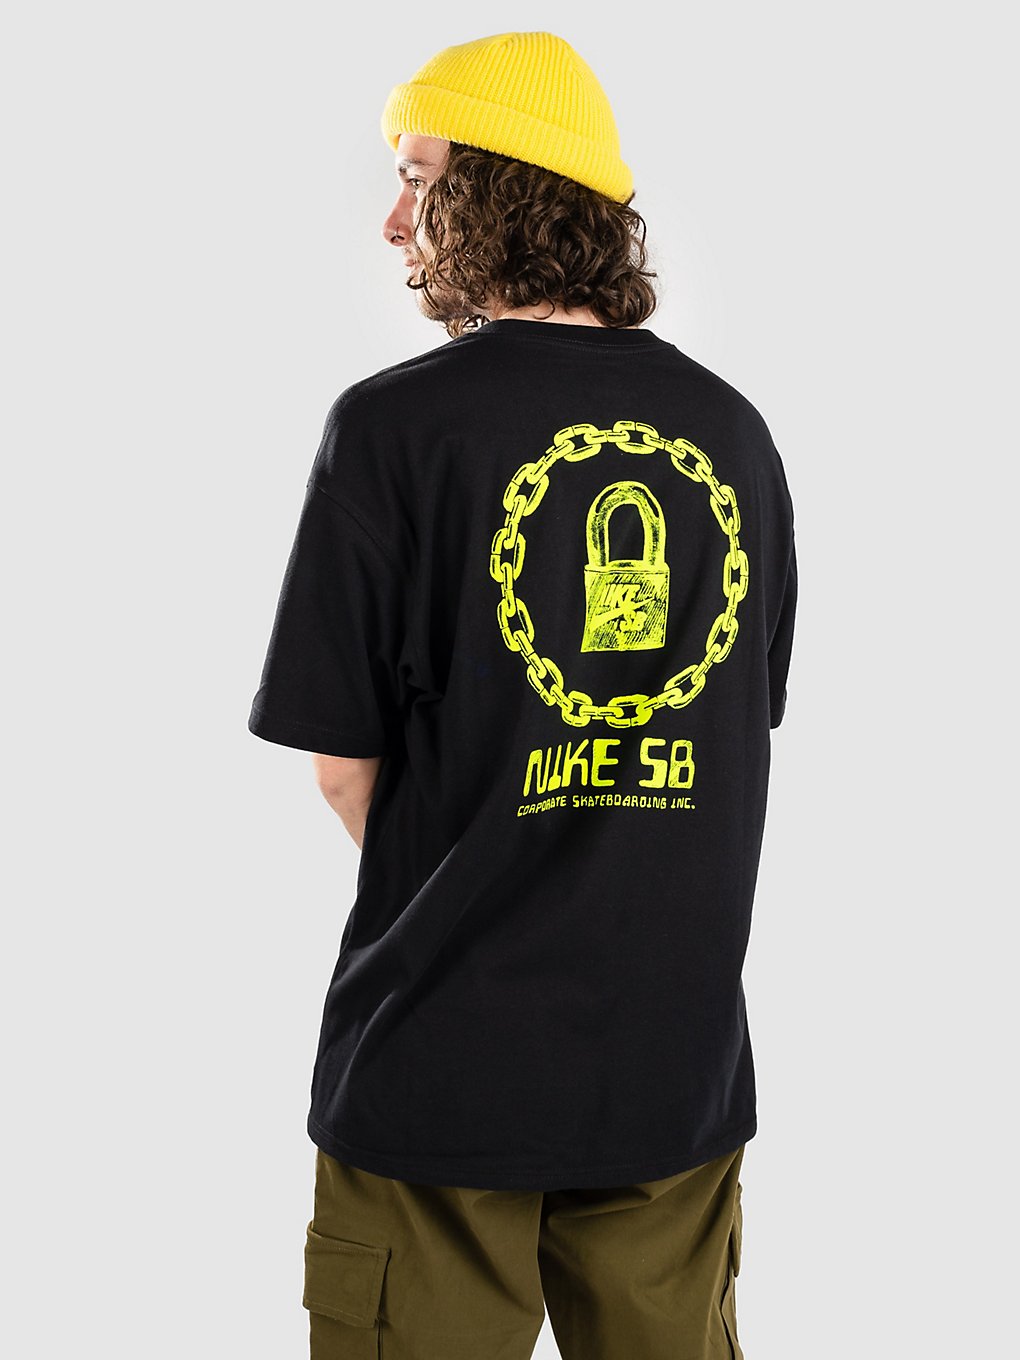 Nike Sb On Lock T-Shirt black kaufen